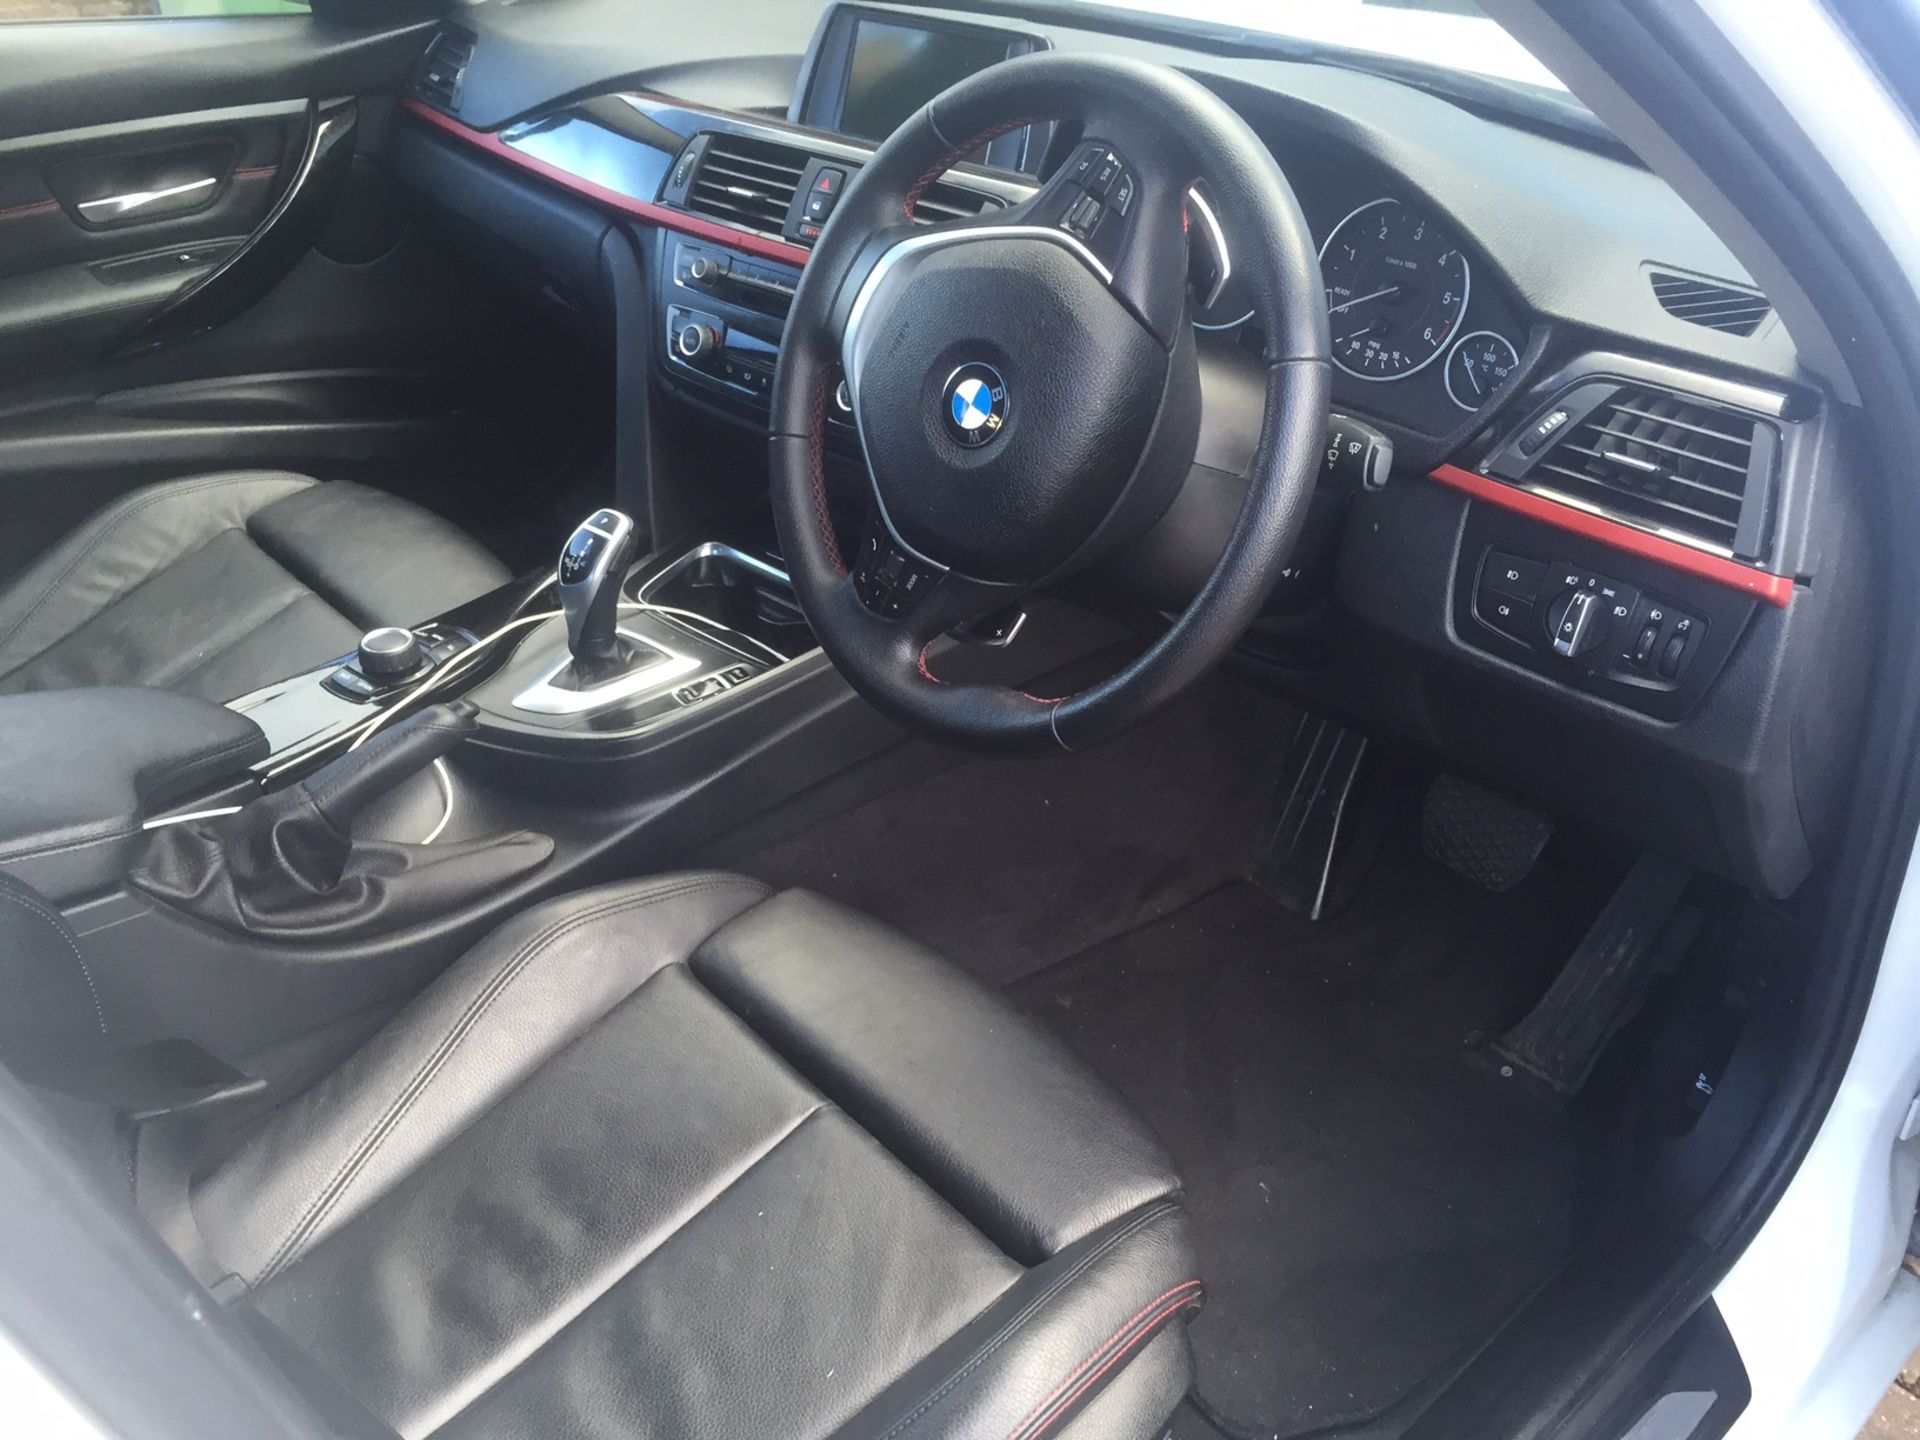 2013/13 REG BMW 320M SPORT 4 DOOR FULL SPEC AUTO 6CD CHANGER CLIMATE CONTROL FULL LEATHER *NO VAT* - Image 7 of 15